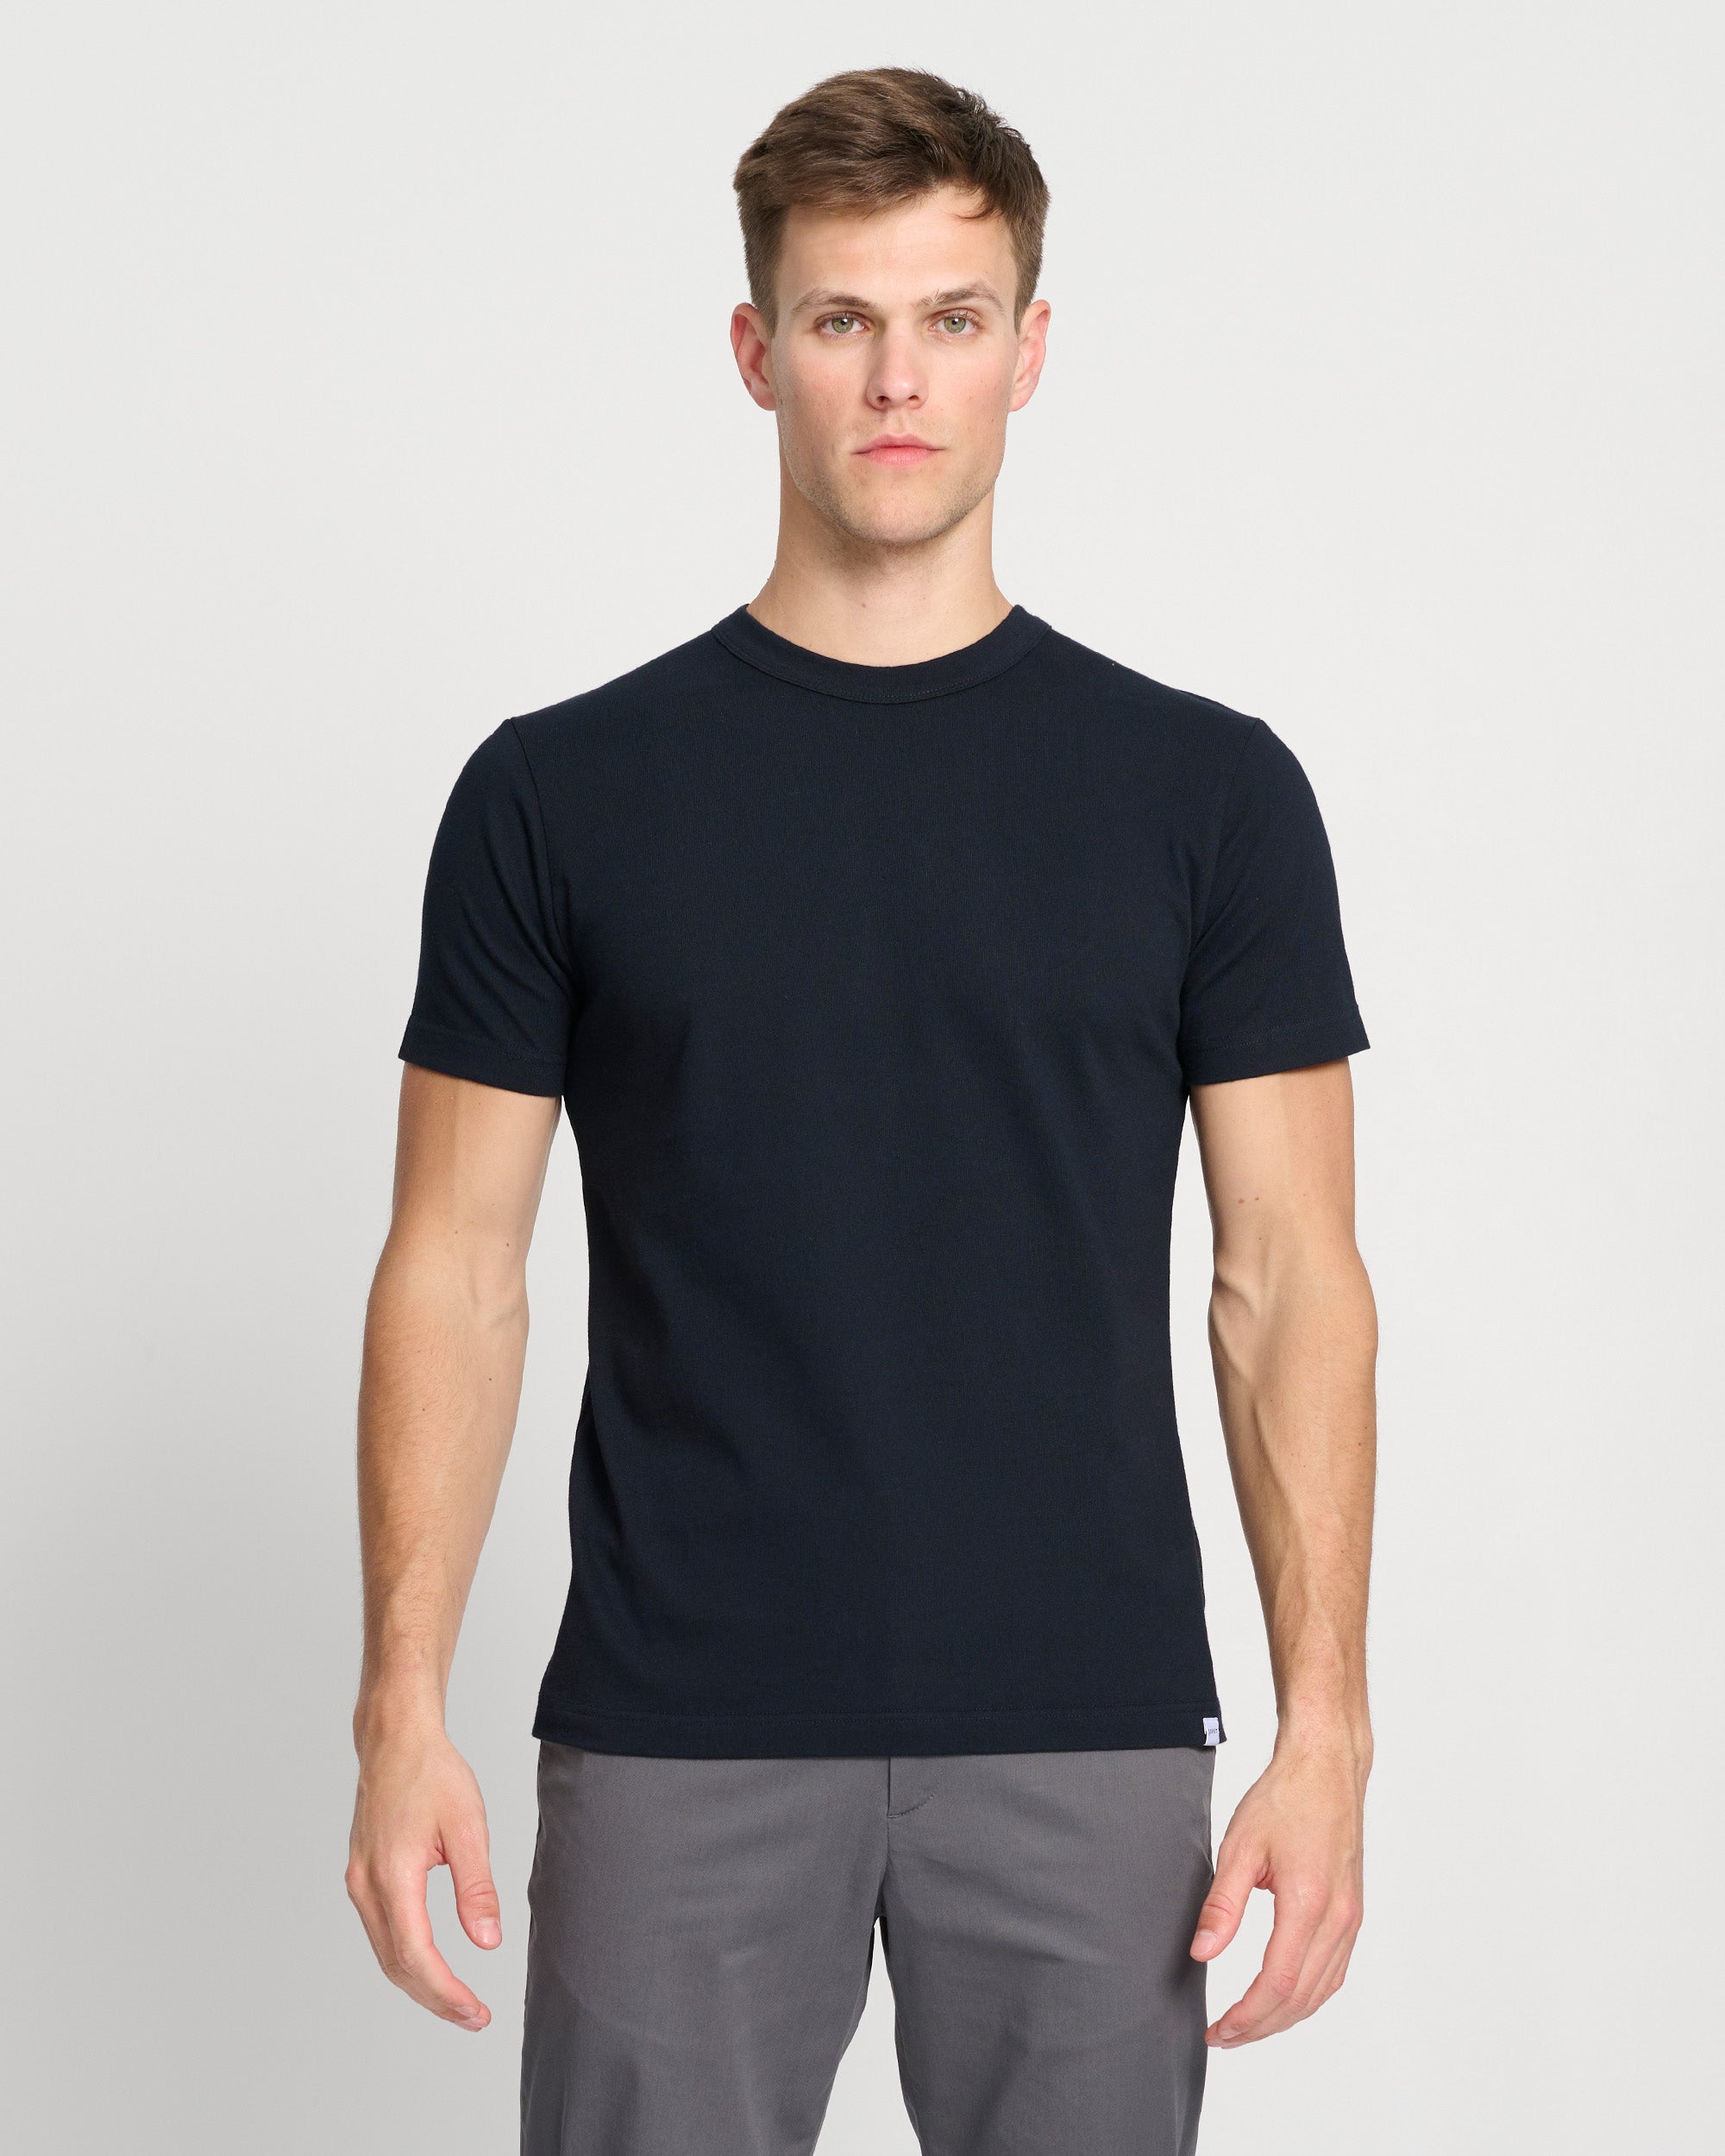 Heavyweight T-Shirt for Men in Navy Blue | 235GSM Cotton